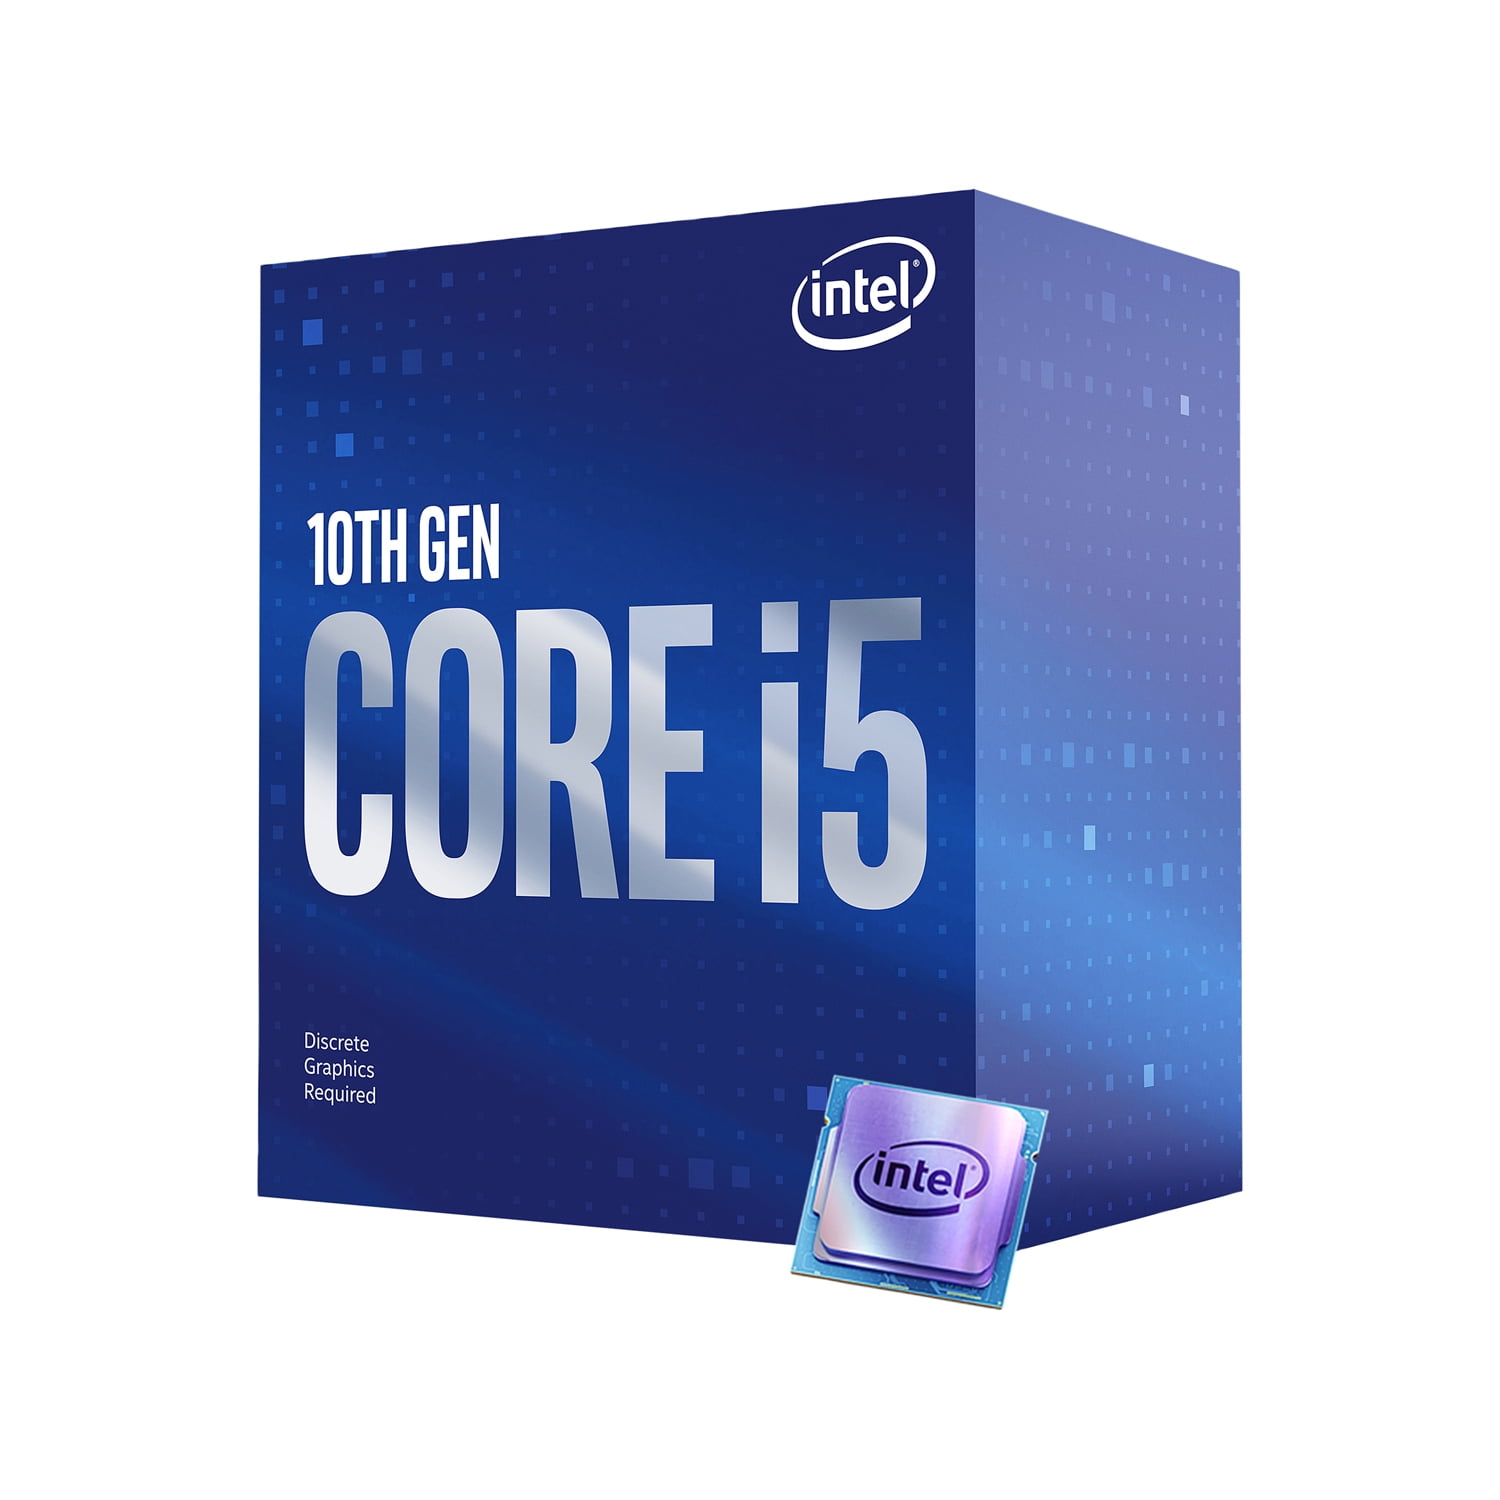 Intel Core i7-8700 8th Generation Tray - Walmart.com